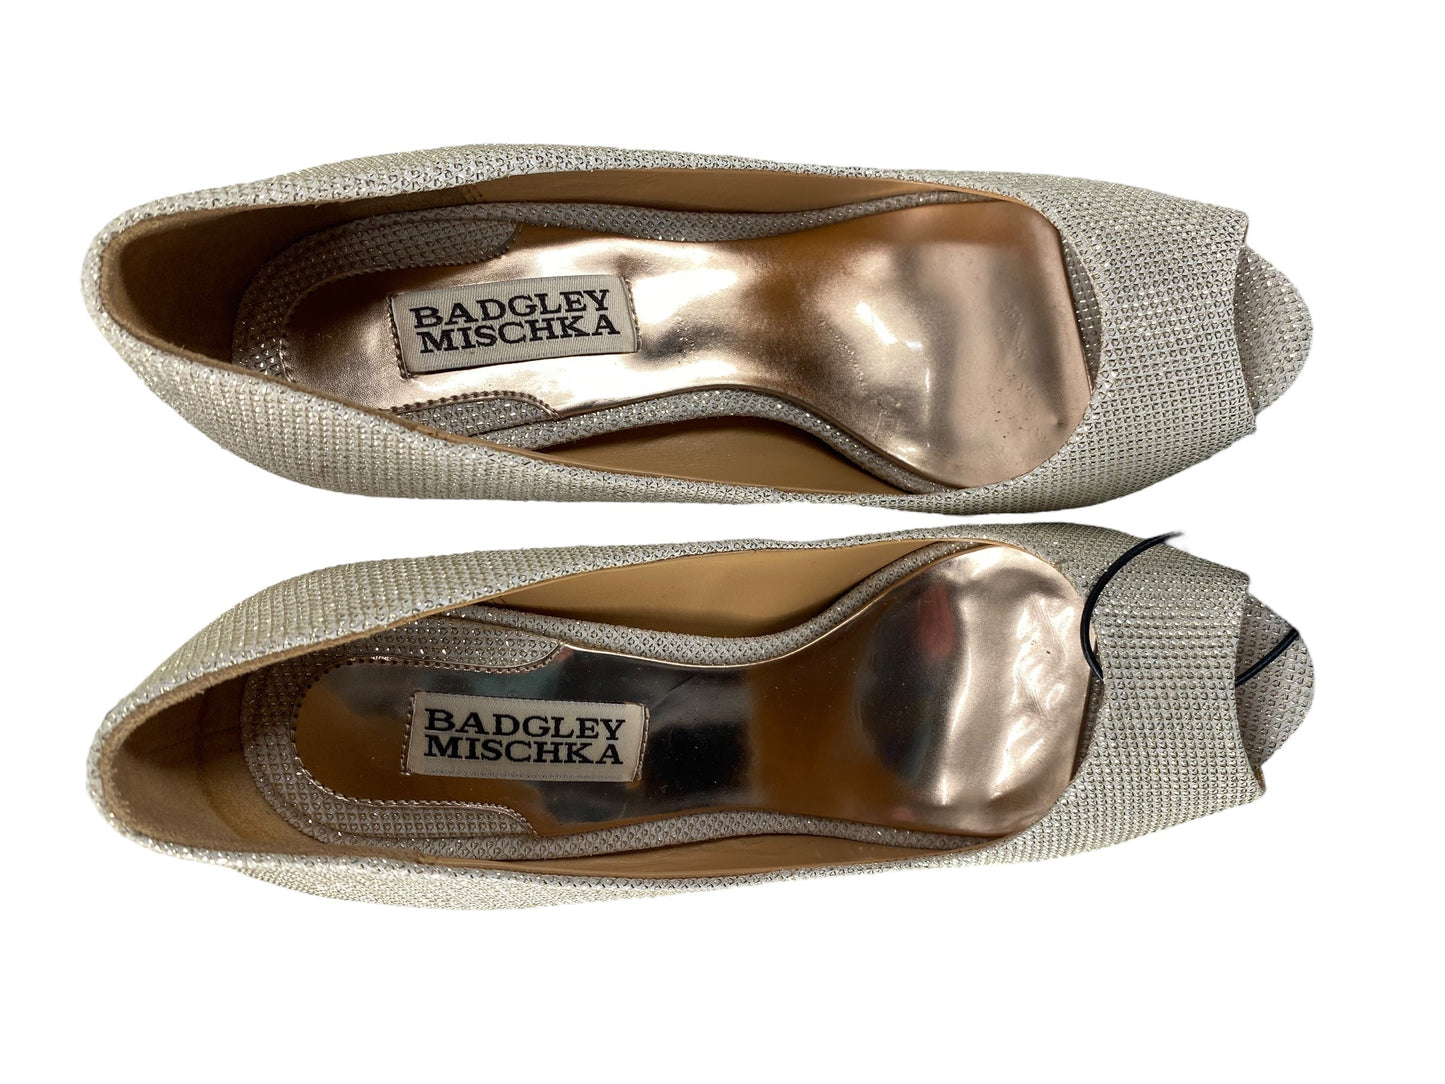 Gold Shoes Heels Stiletto Badgley Mischka, Size 7